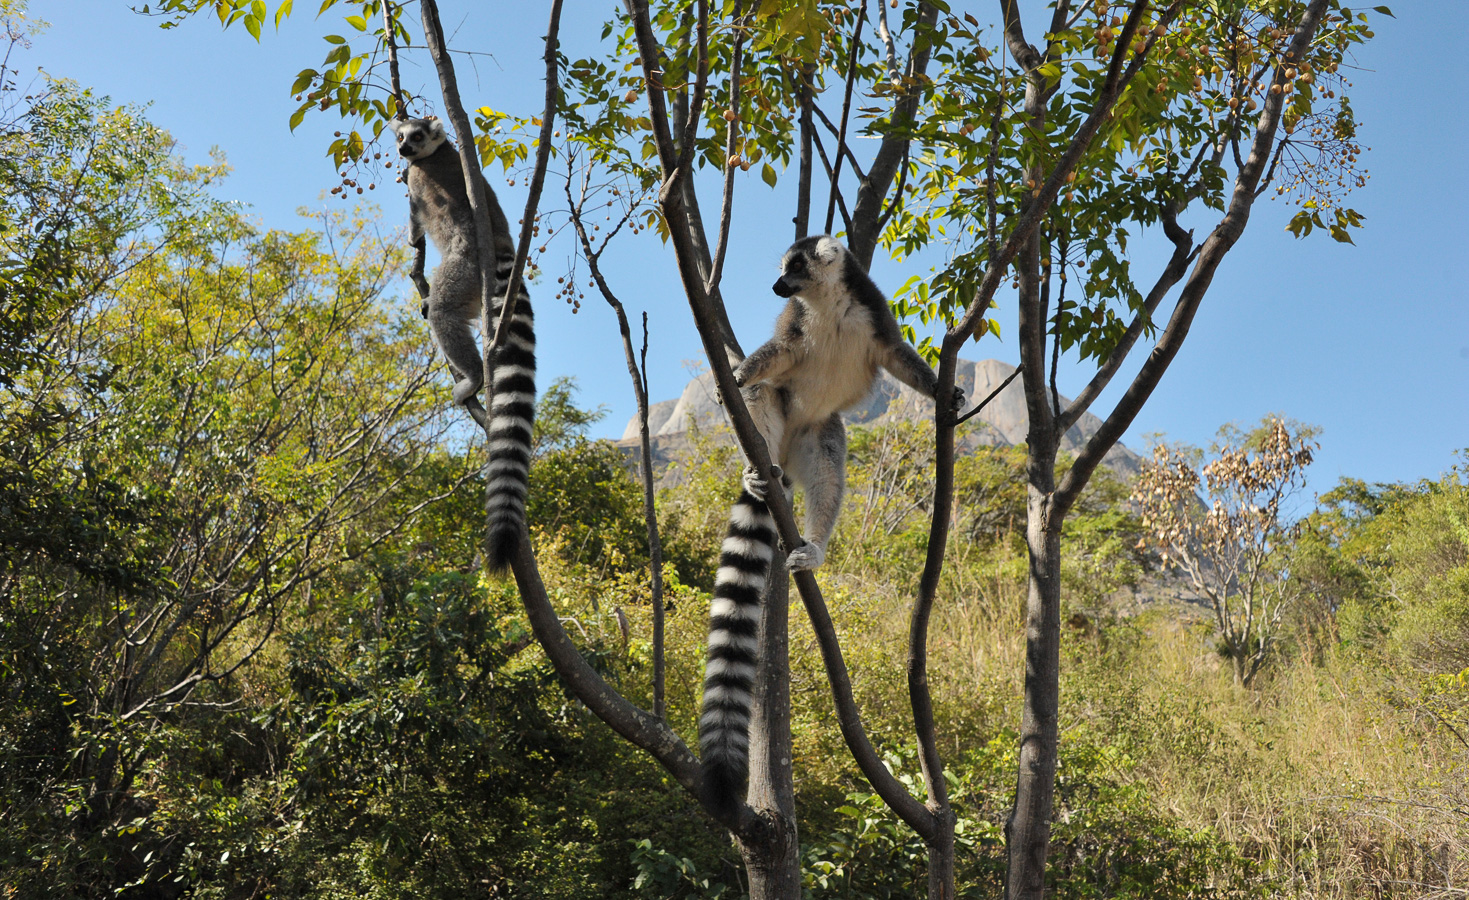 Lemur catta [28 mm, 1/1600 sec at f / 8.0, ISO 1600]